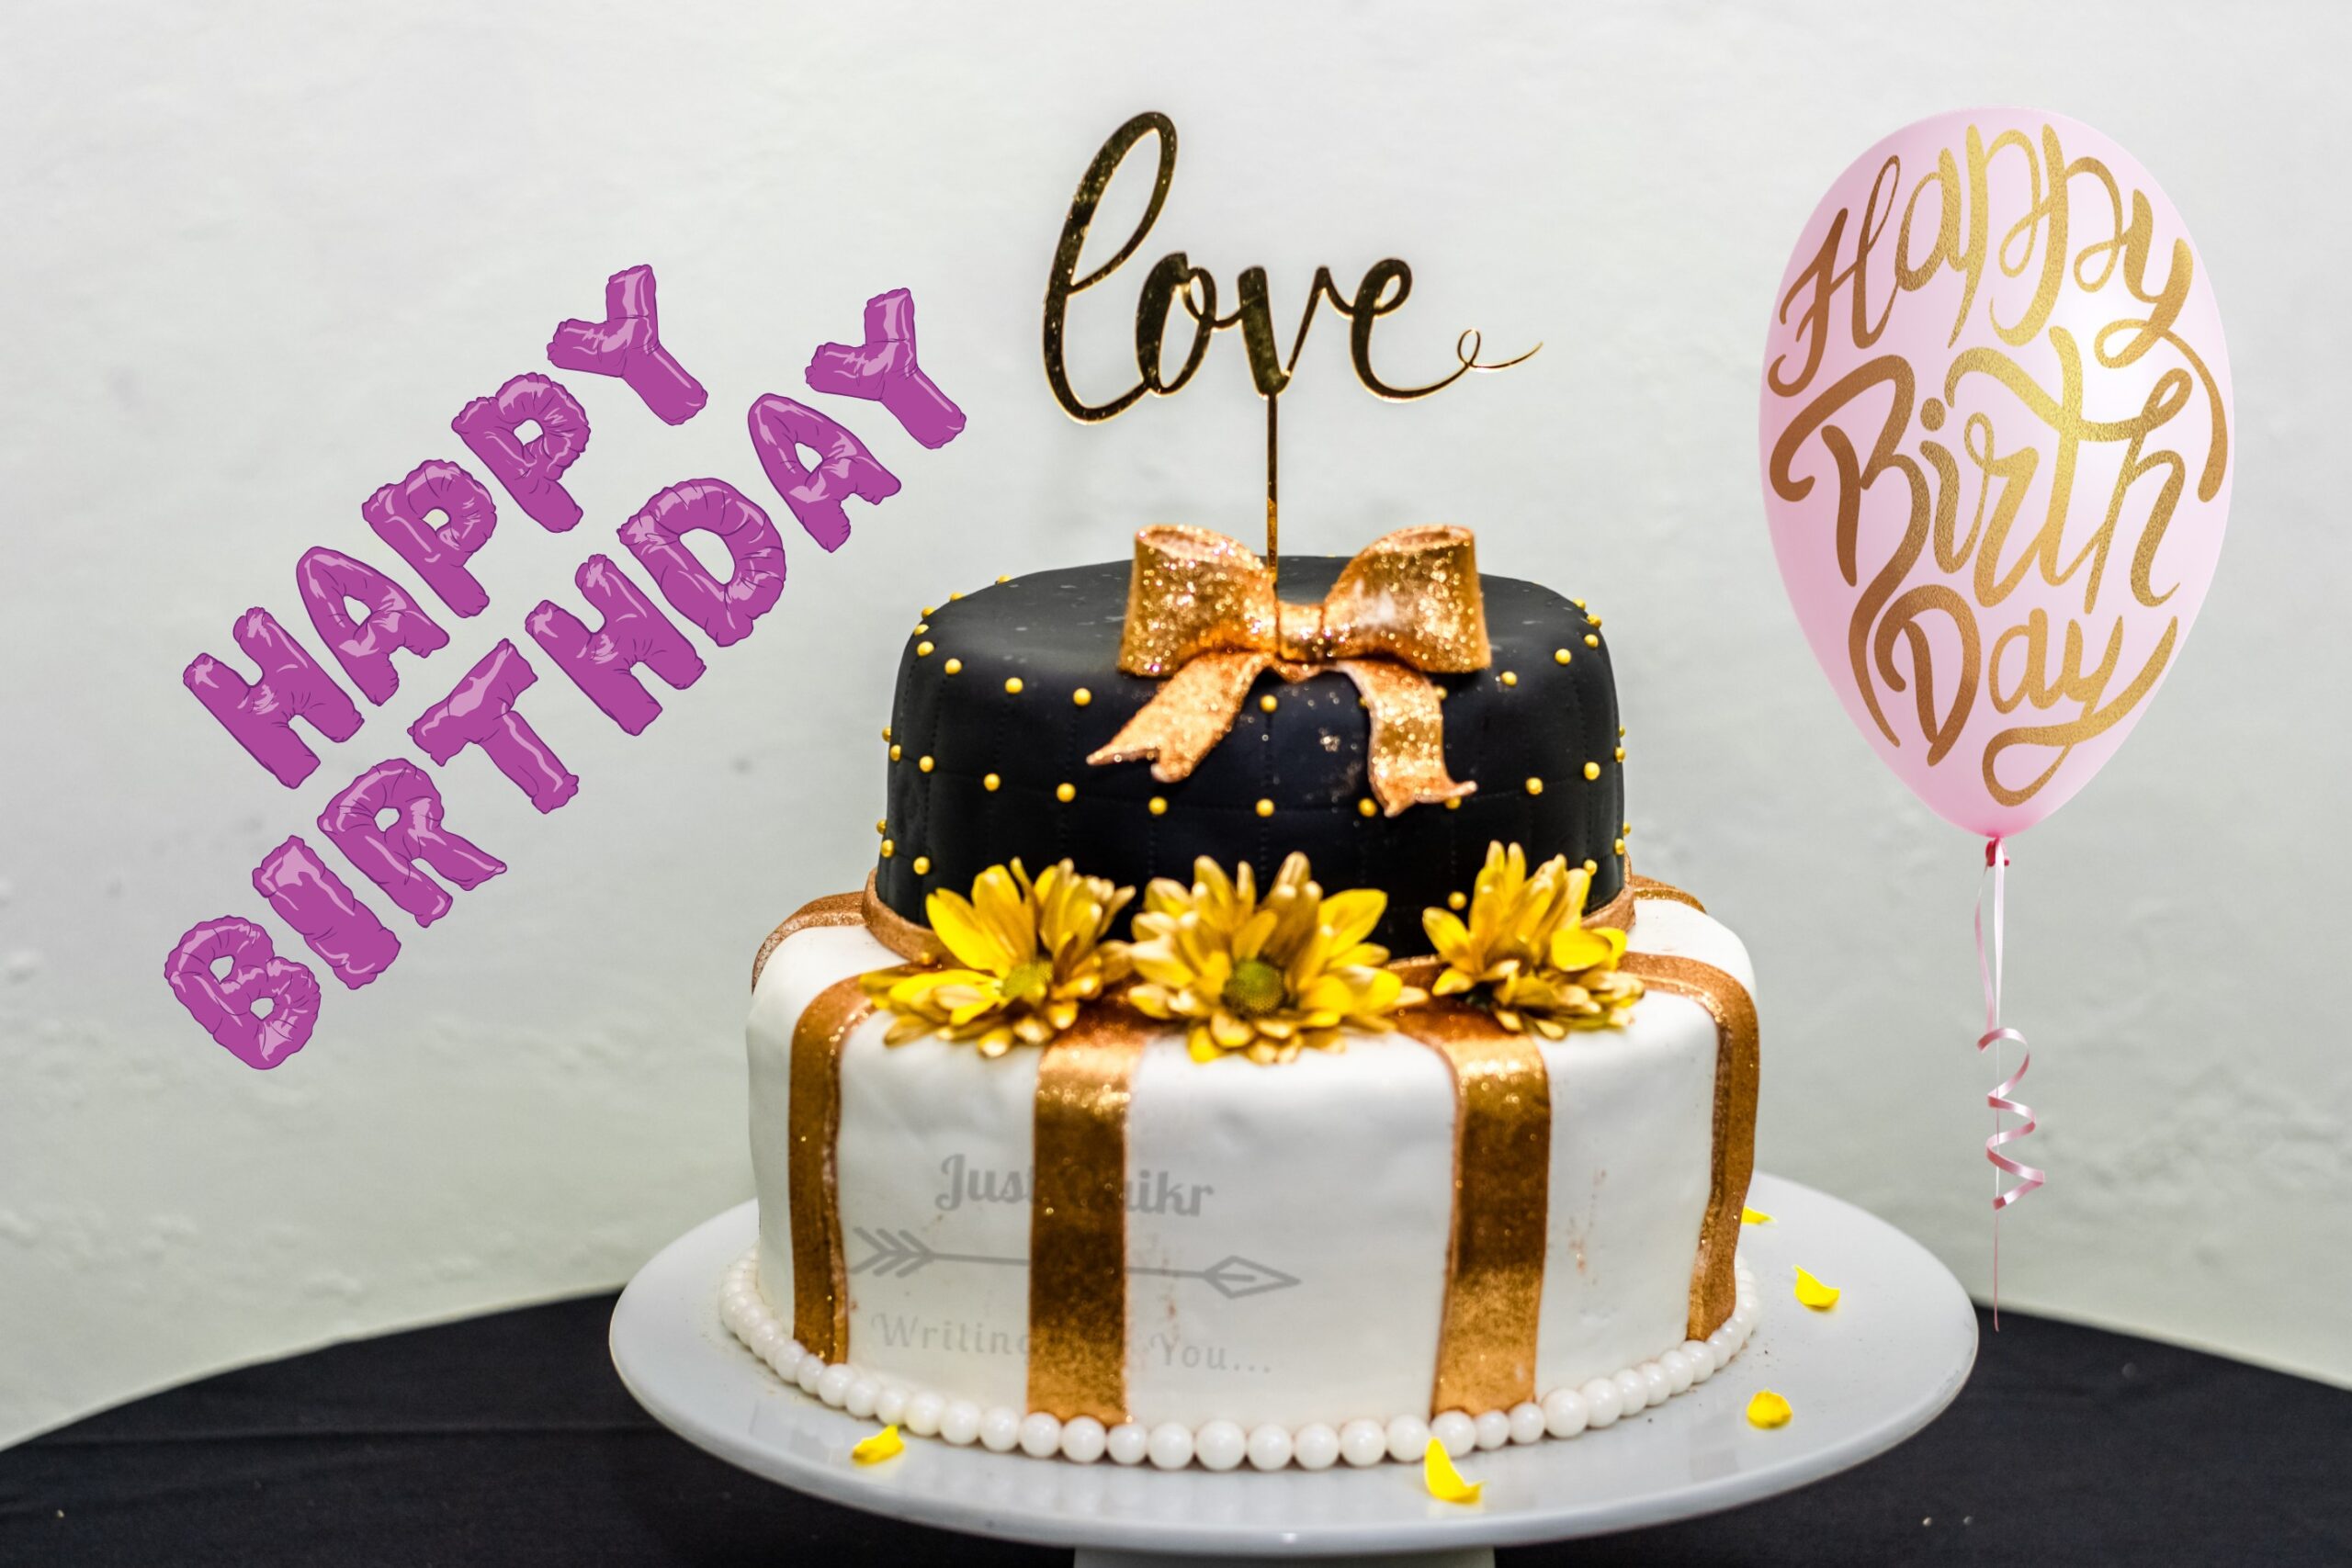 Creative Happy Birthday Wishing Cake Status Images for Boyfriend